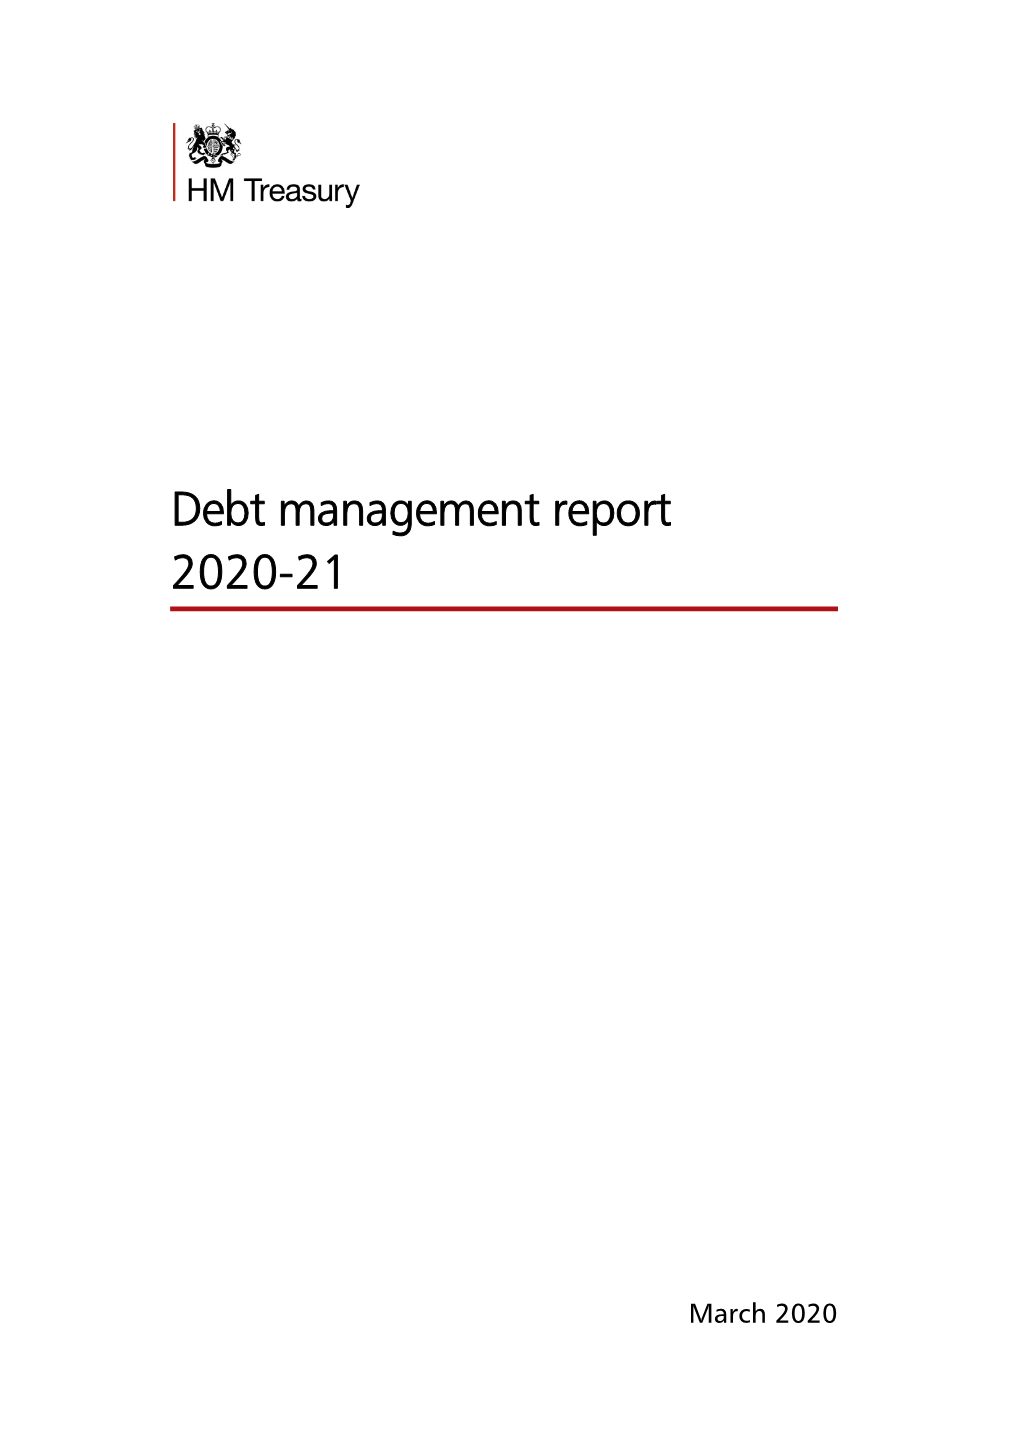 Debt Management Report 2020-21